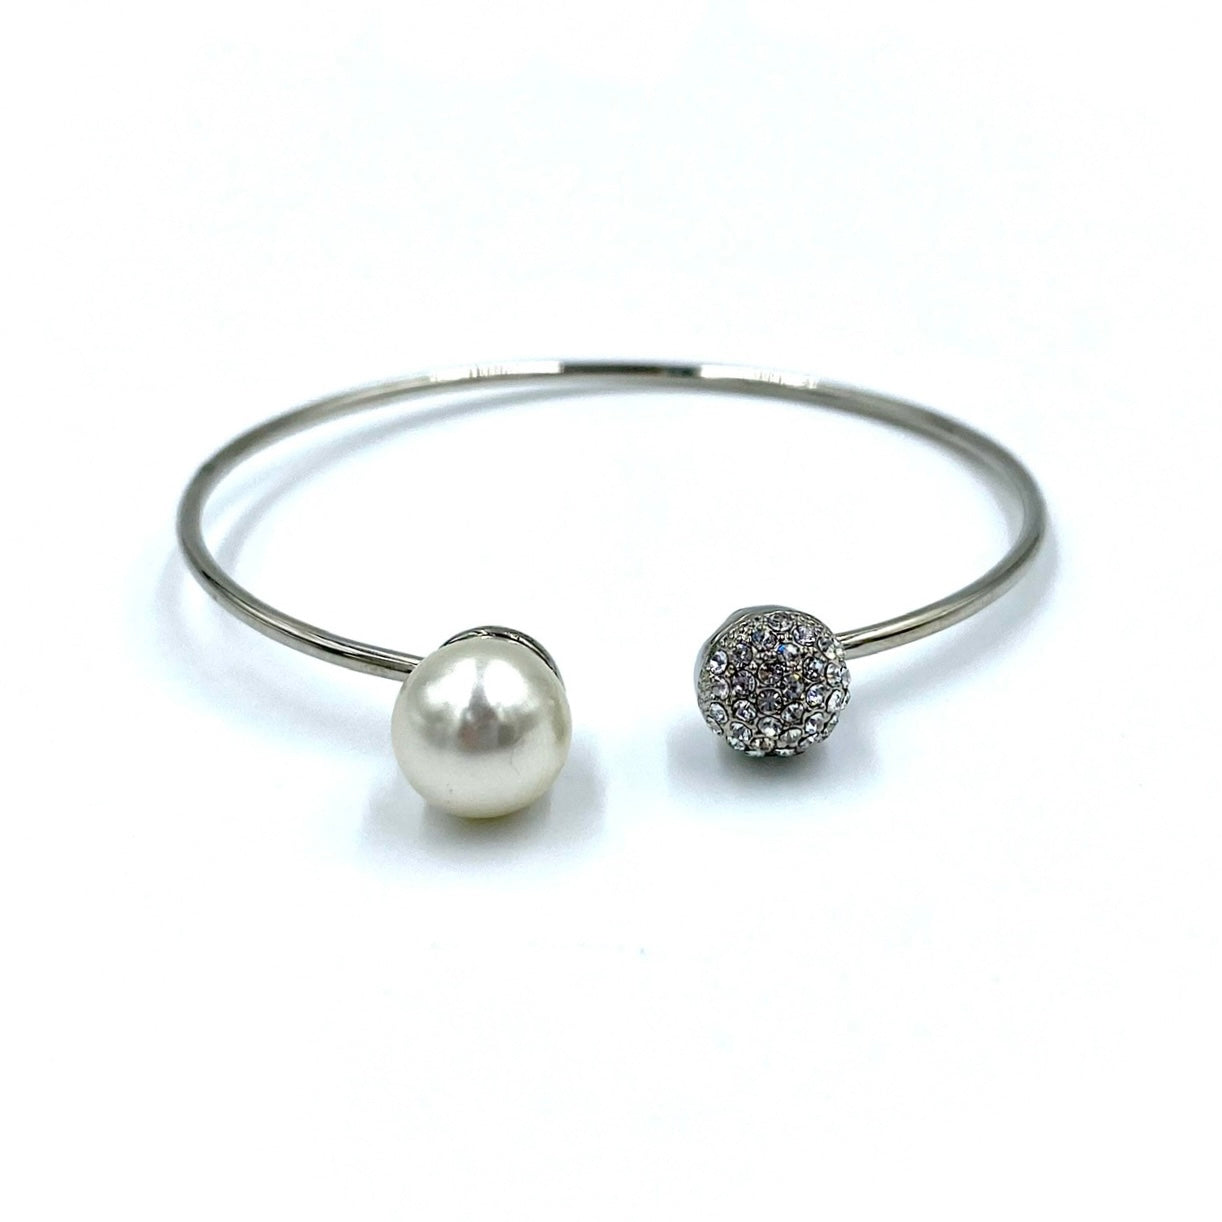 Elegant white pearl & silver set